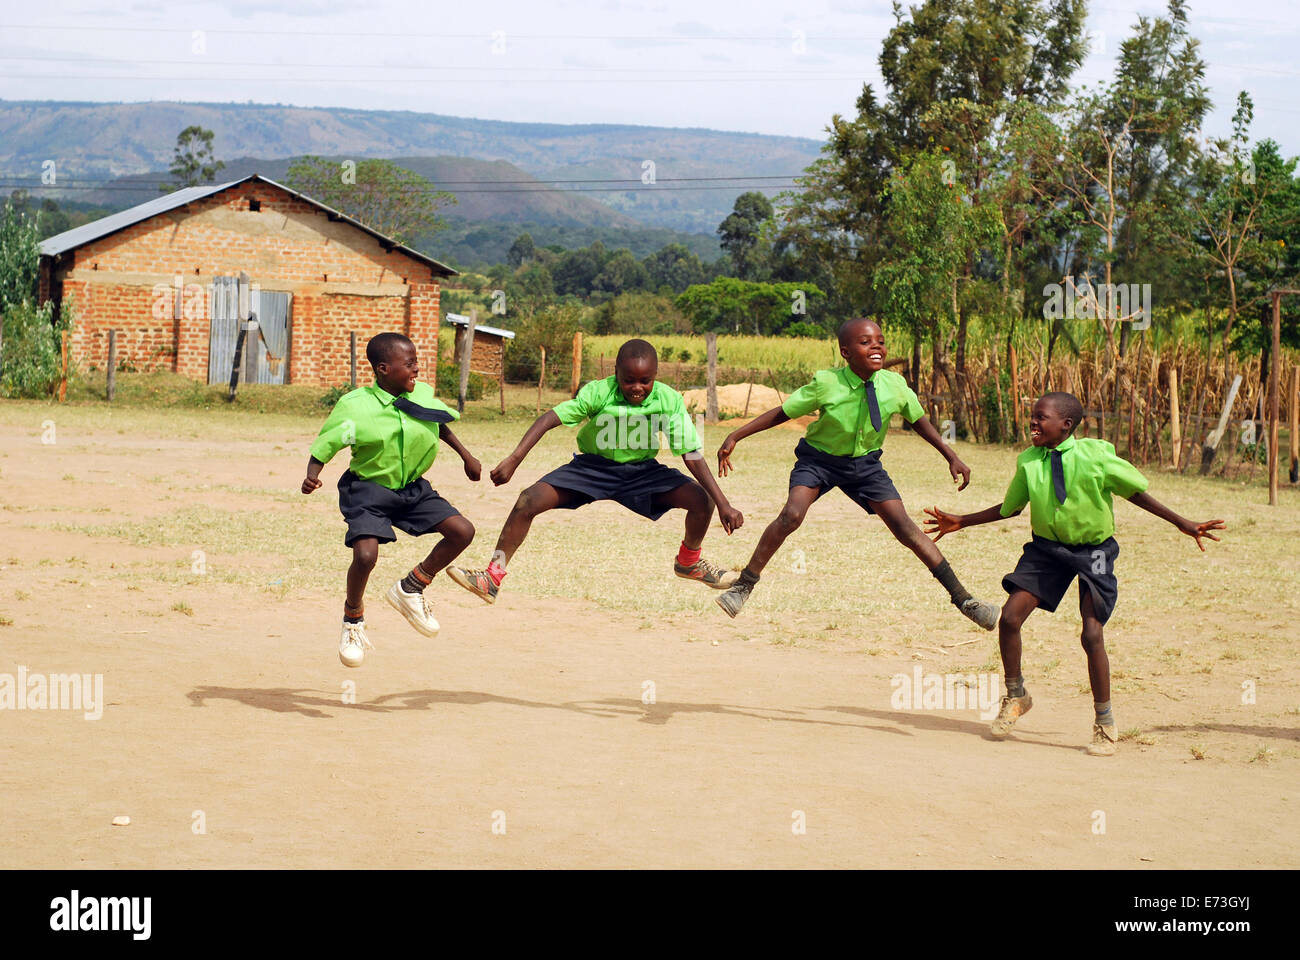 Kenya, Kakamega, 4 schoolboys jumping mid air in schoolyard (MR). Stock Photo